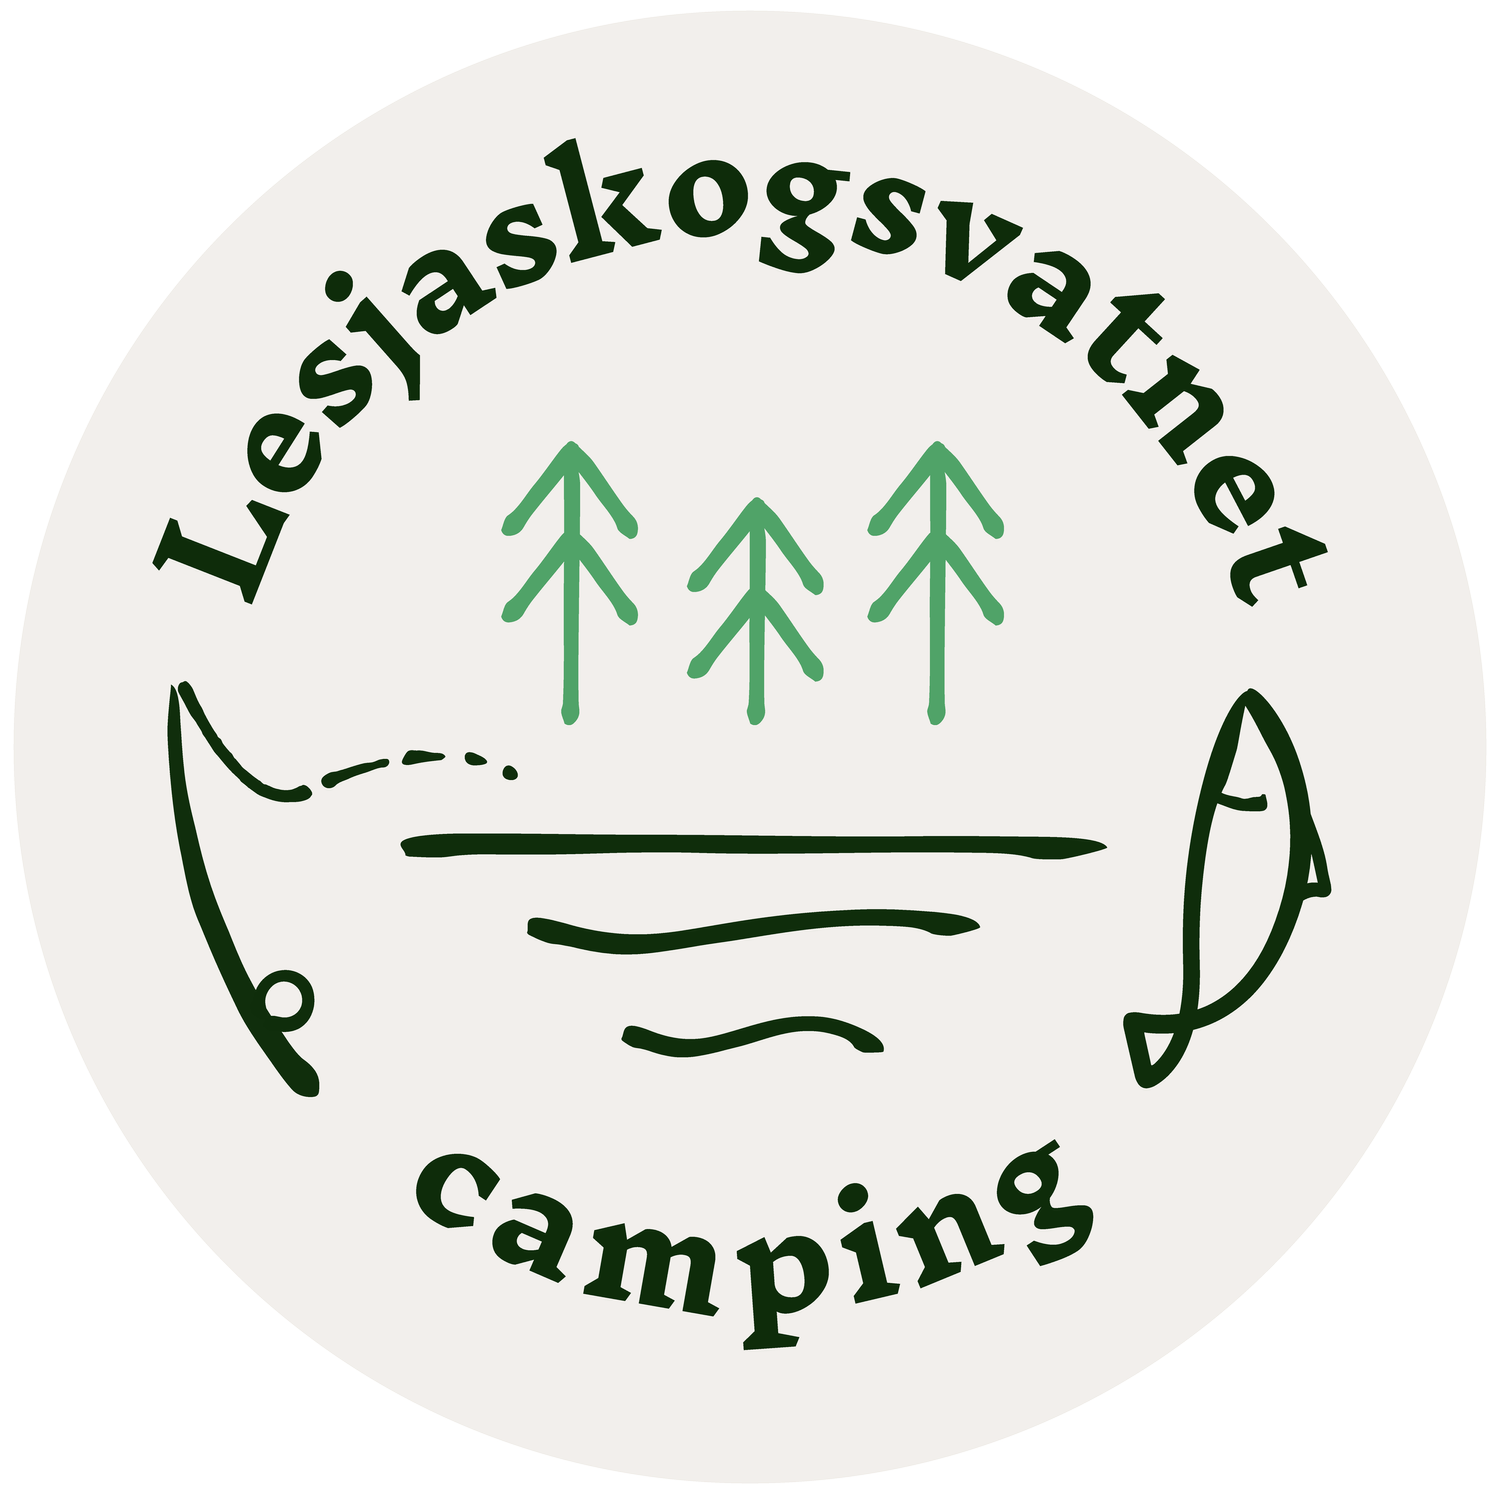 Lesjaskogsvatnet Camping